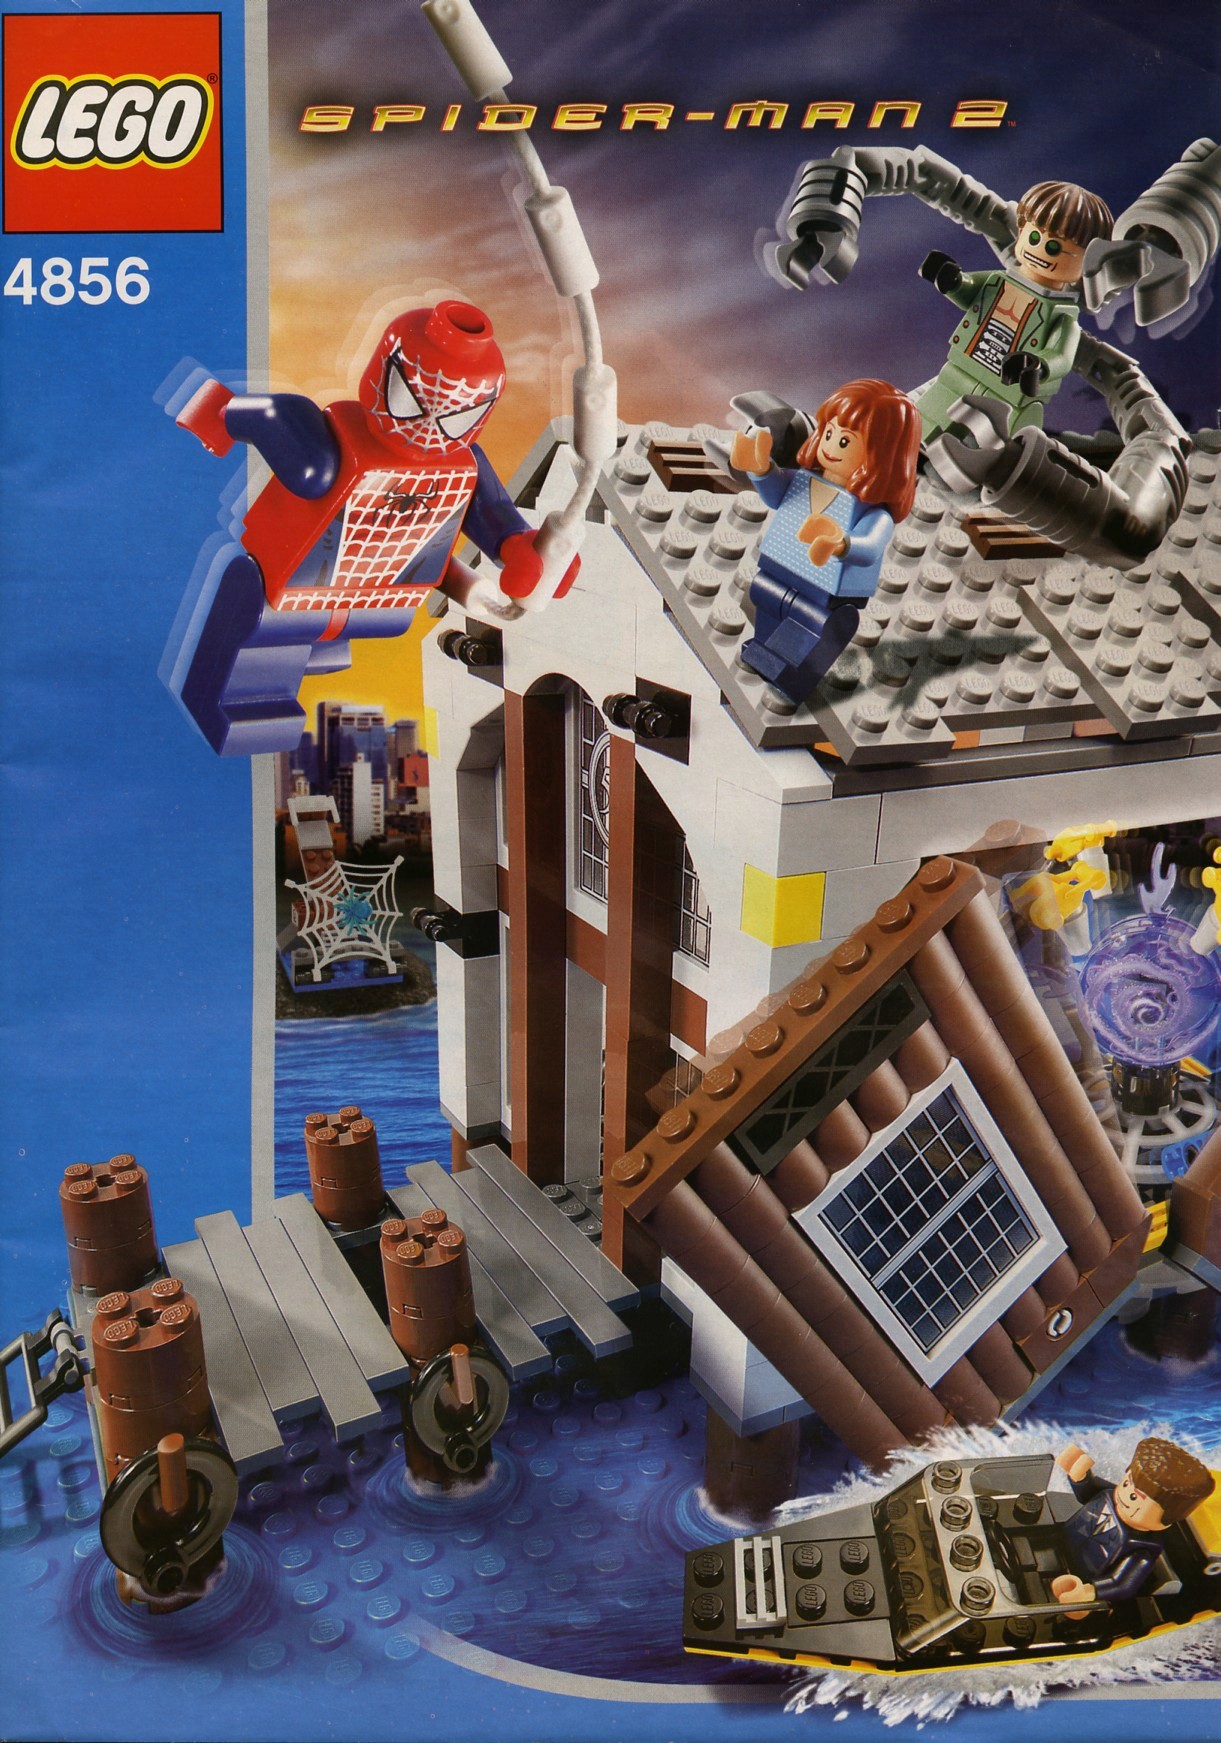 lego spiderman sets